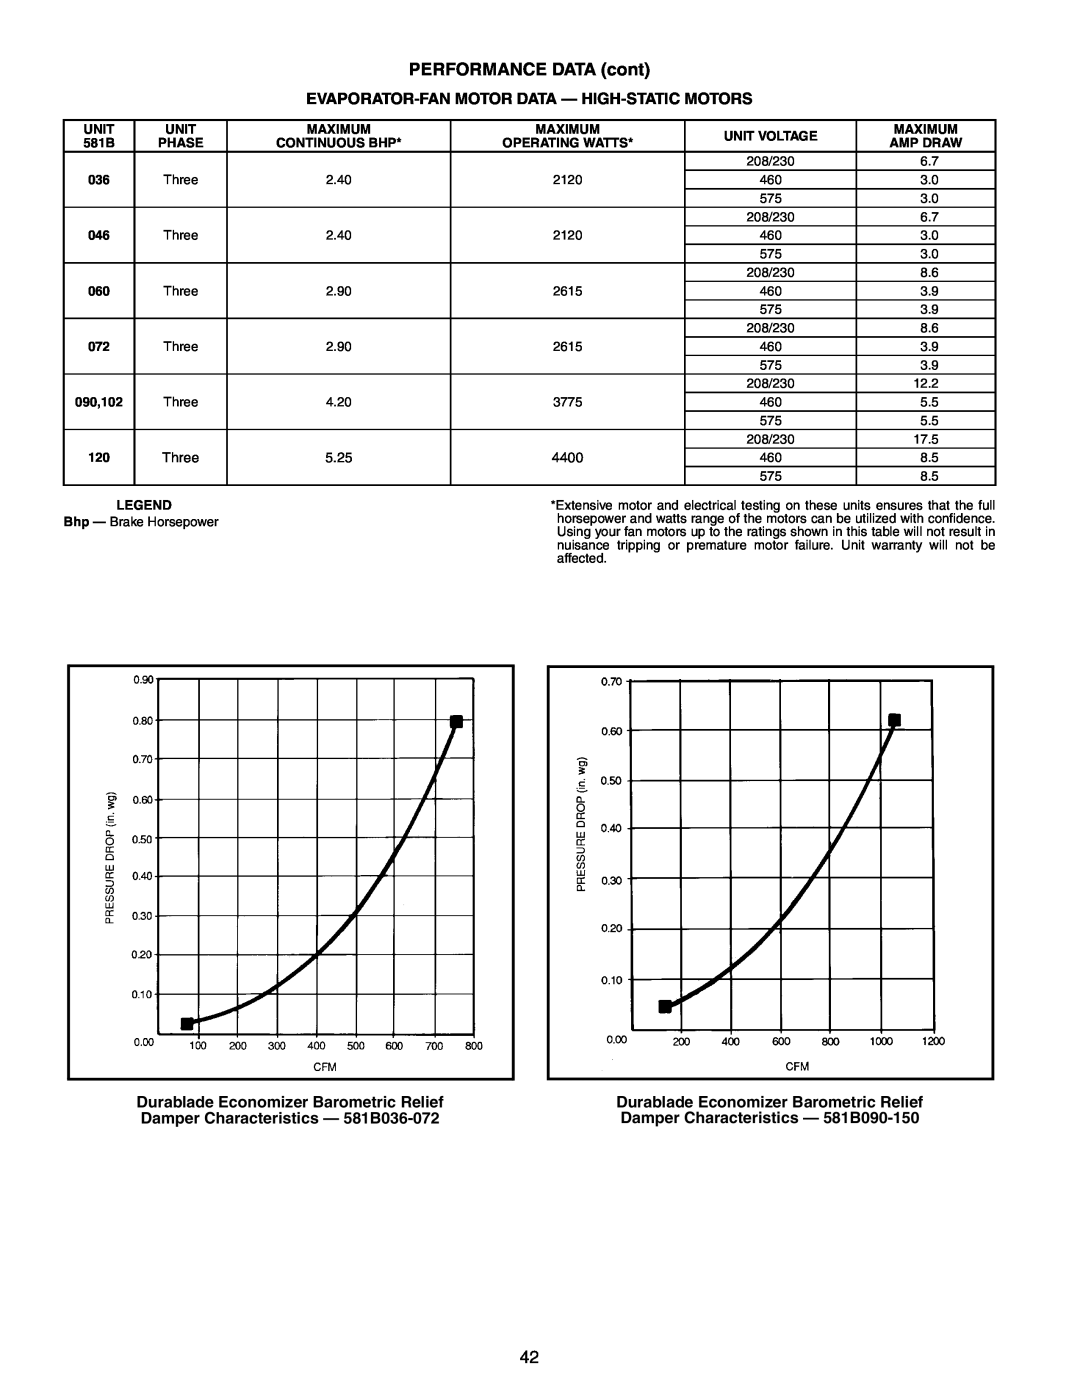 Bryant 581B manual PERFORMANCE DATA cont, Evaporator-Fanmotor Data - High-Staticmotors 